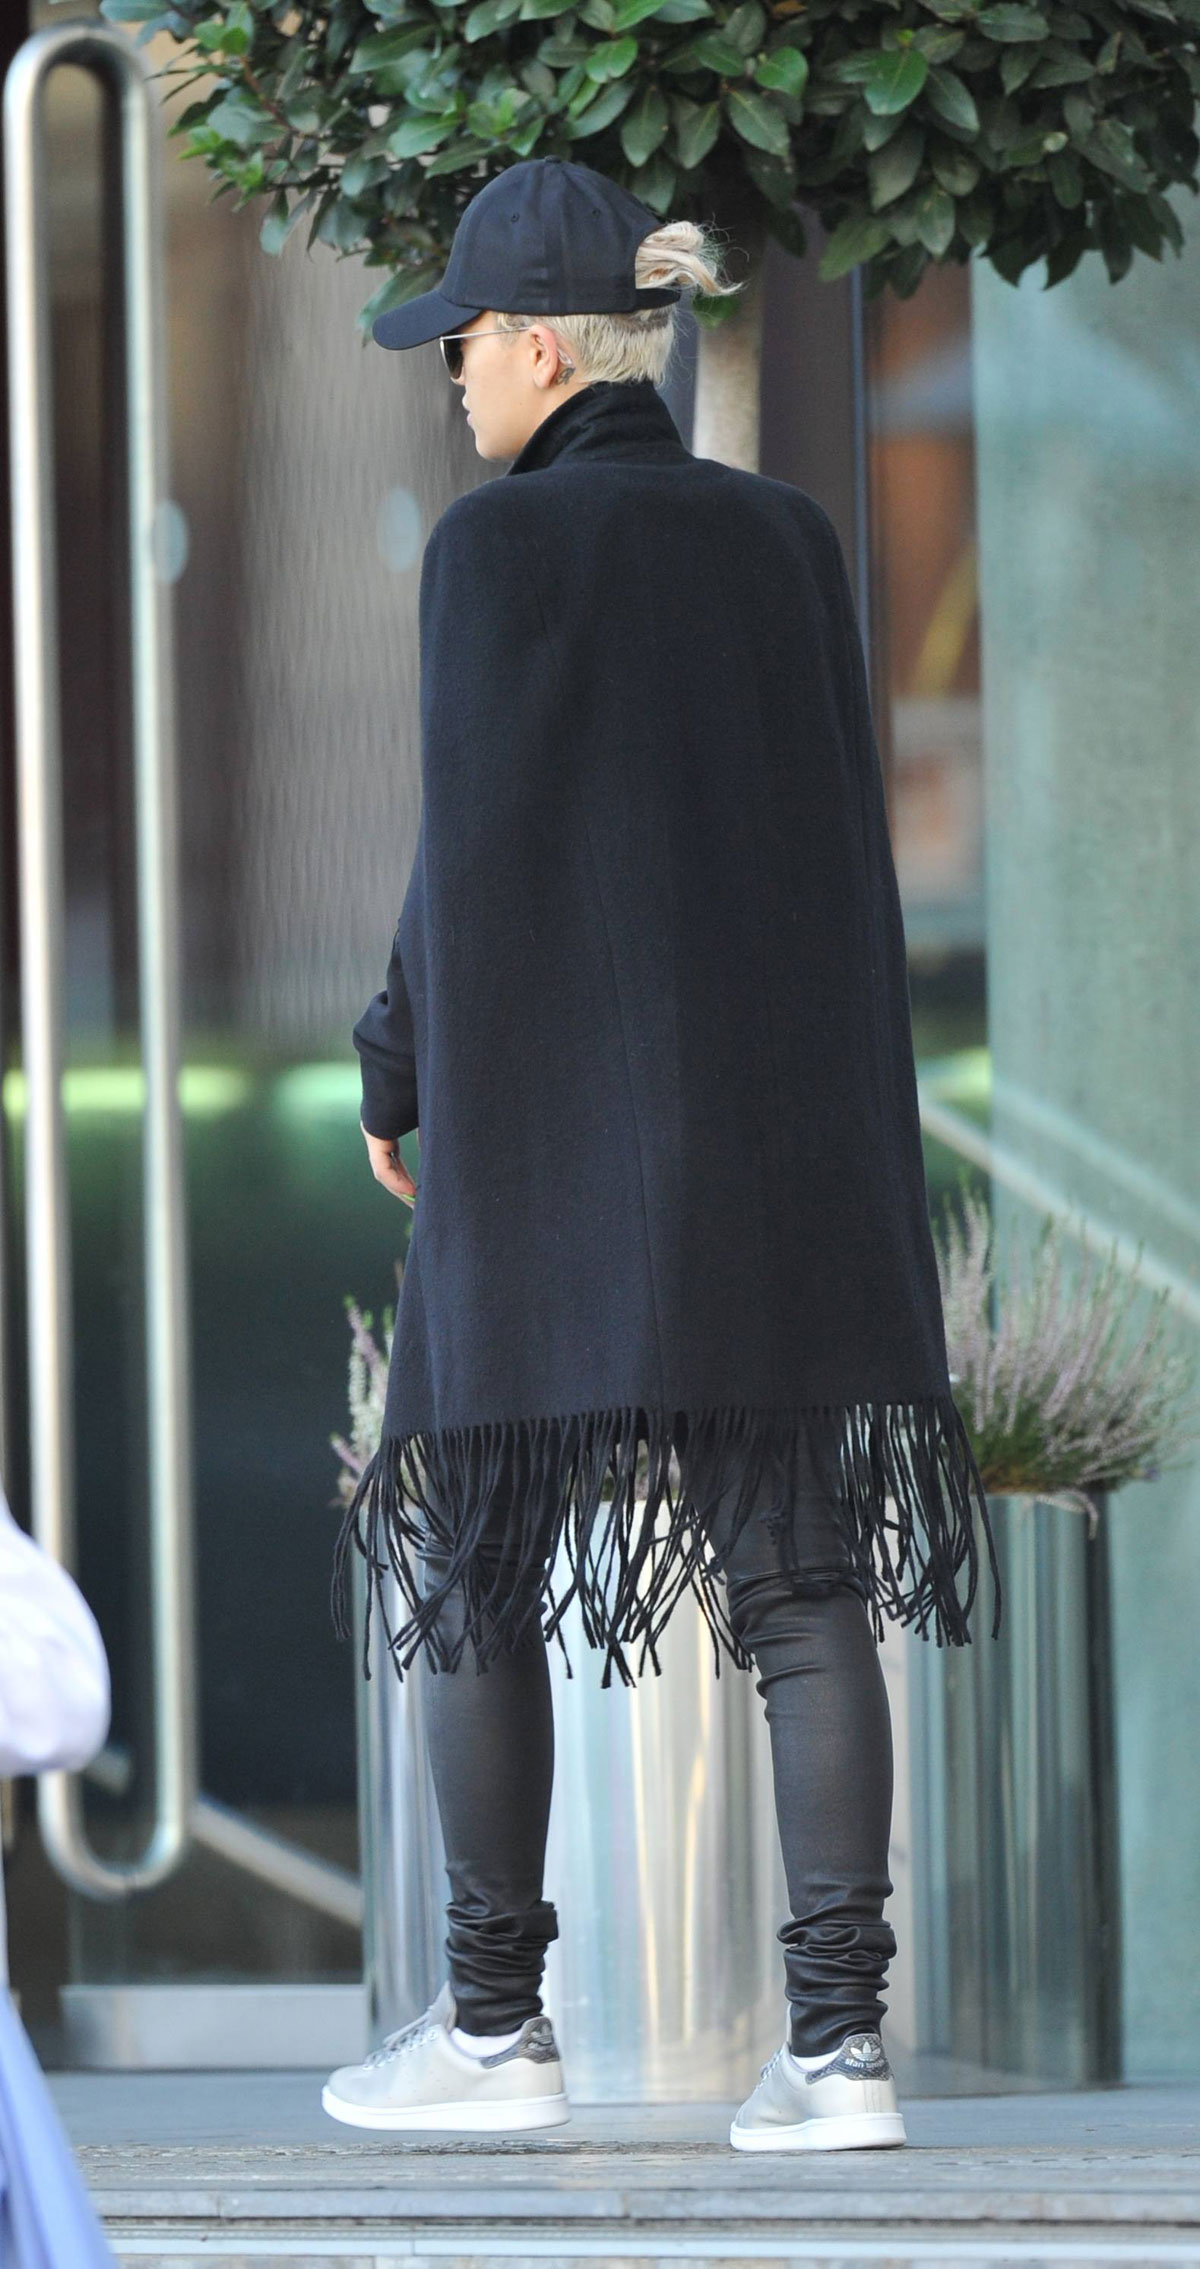 Rita Ora leaving her hotel in Manchester